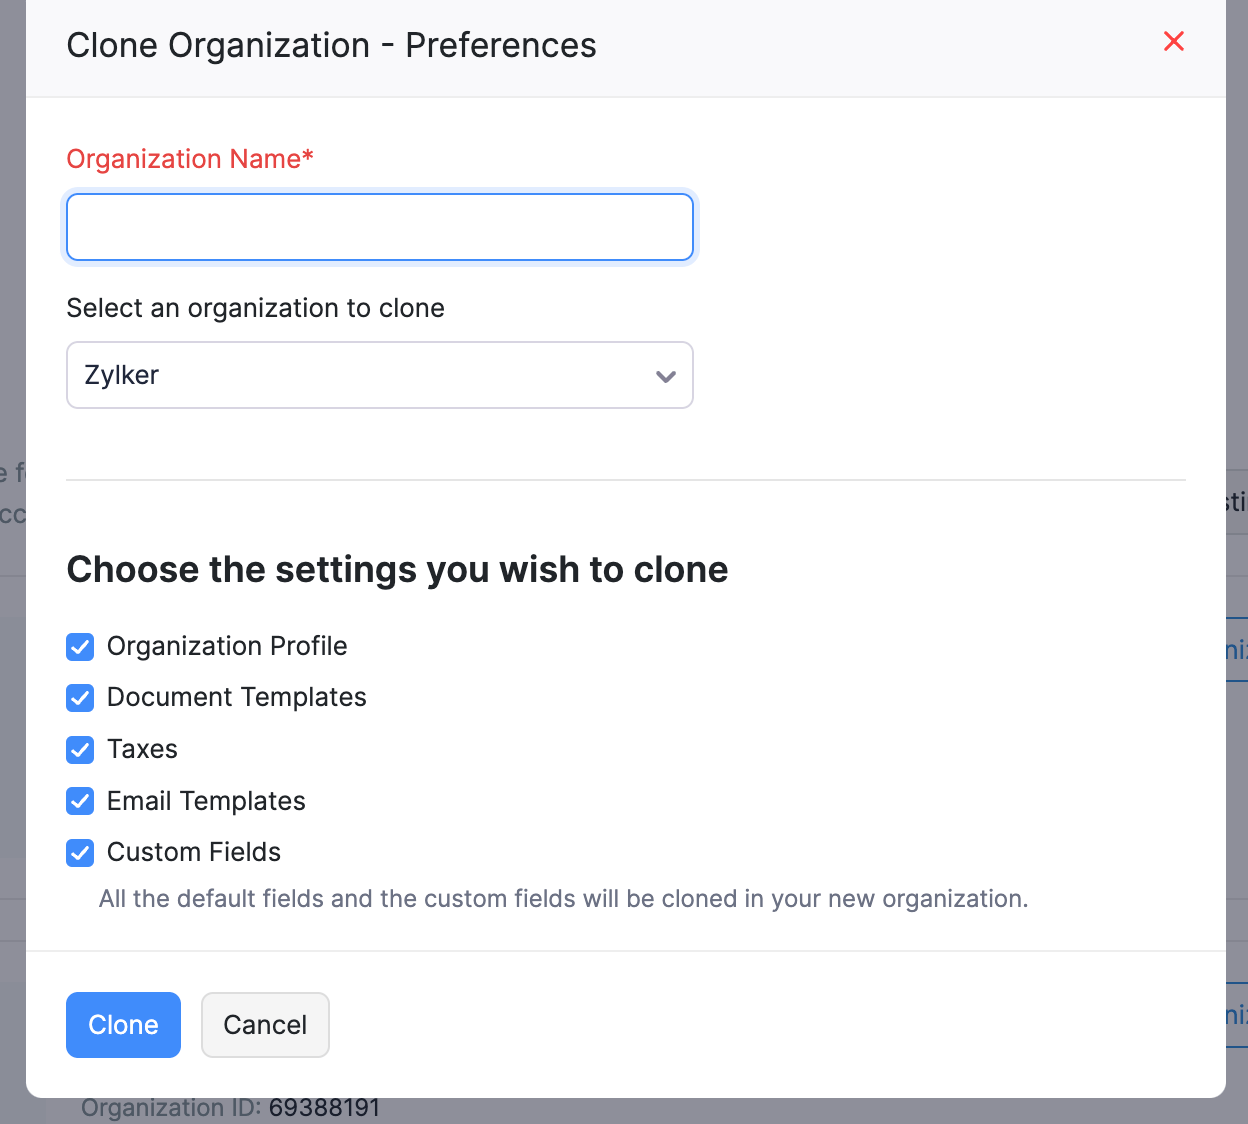 Clone Organization Preferences